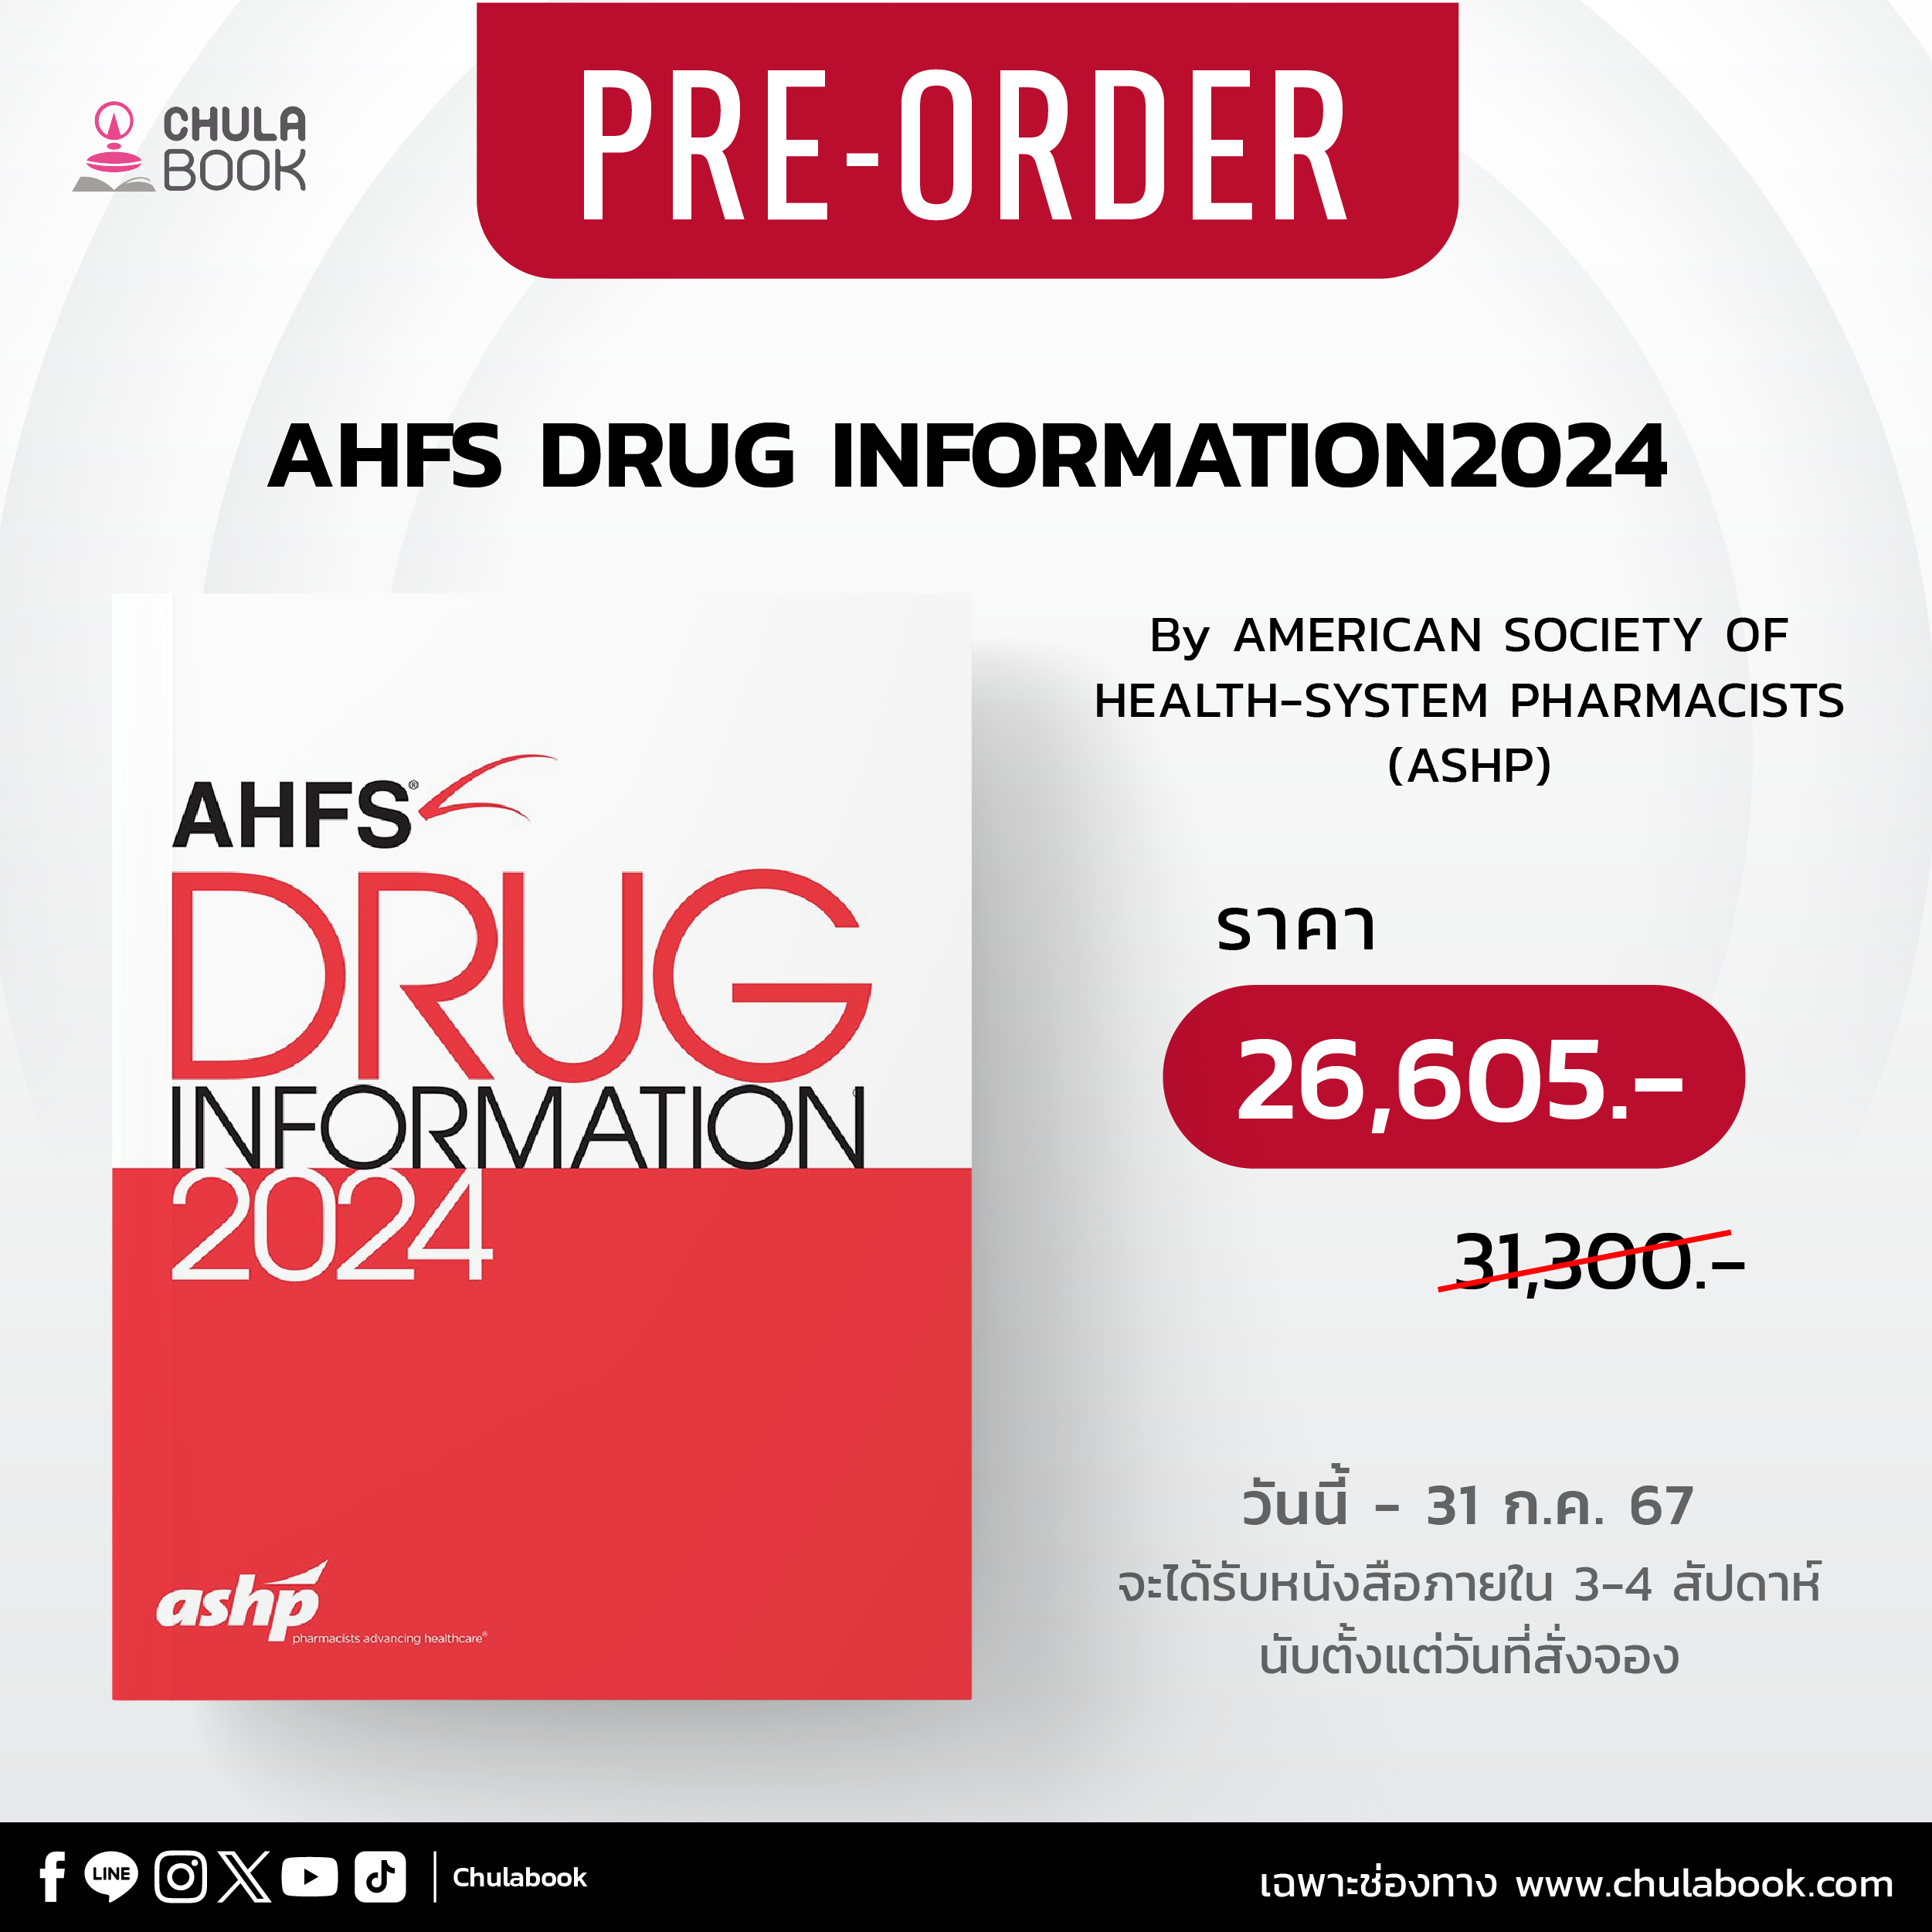 AHFS DRUG INFORMATION 2024